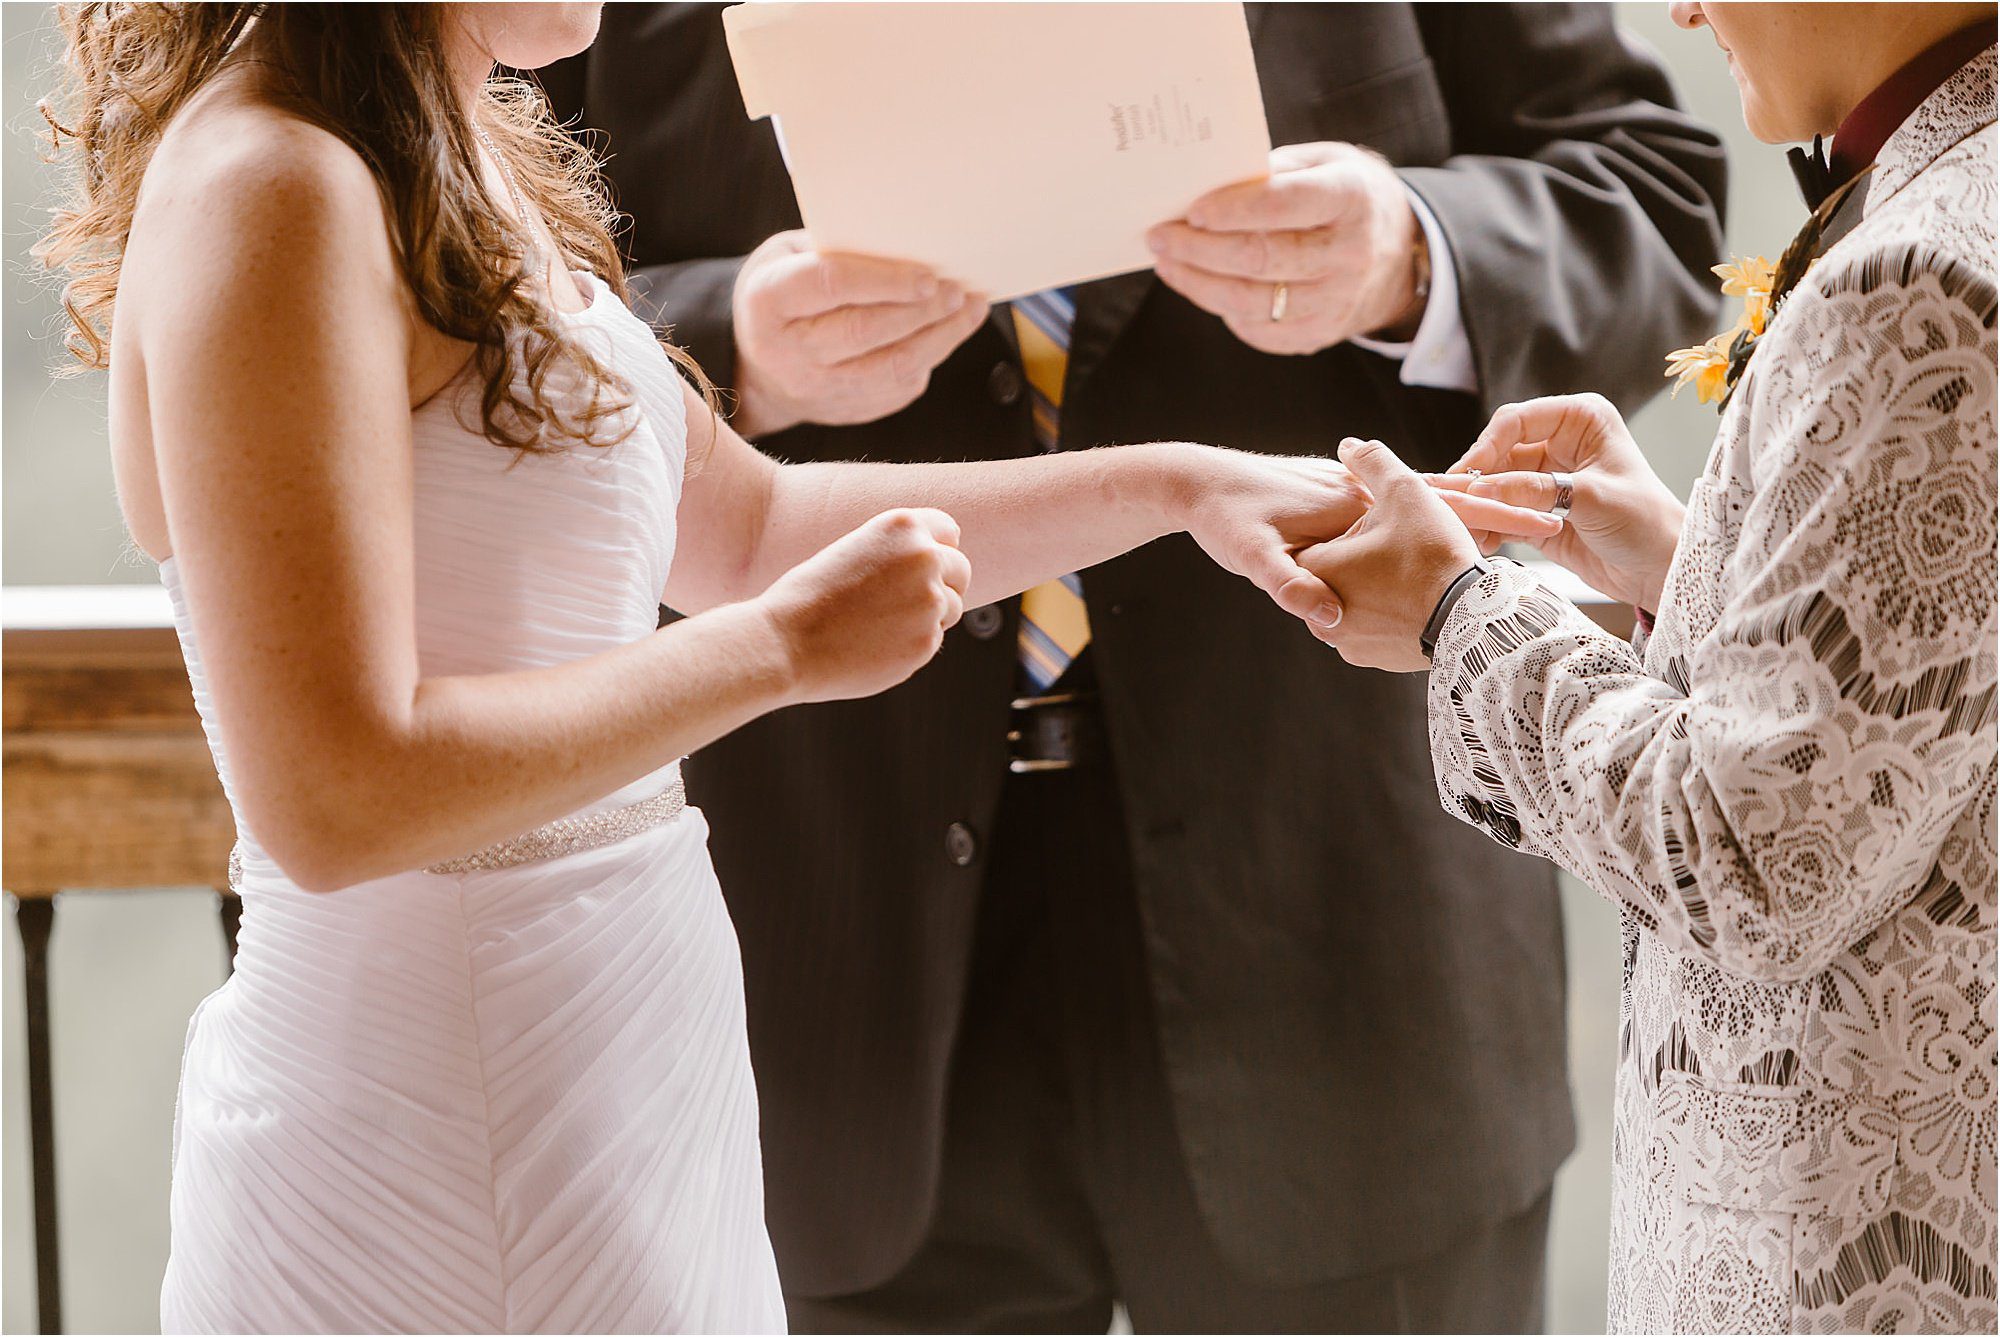 wedding ring exchanged at wedding ceremony